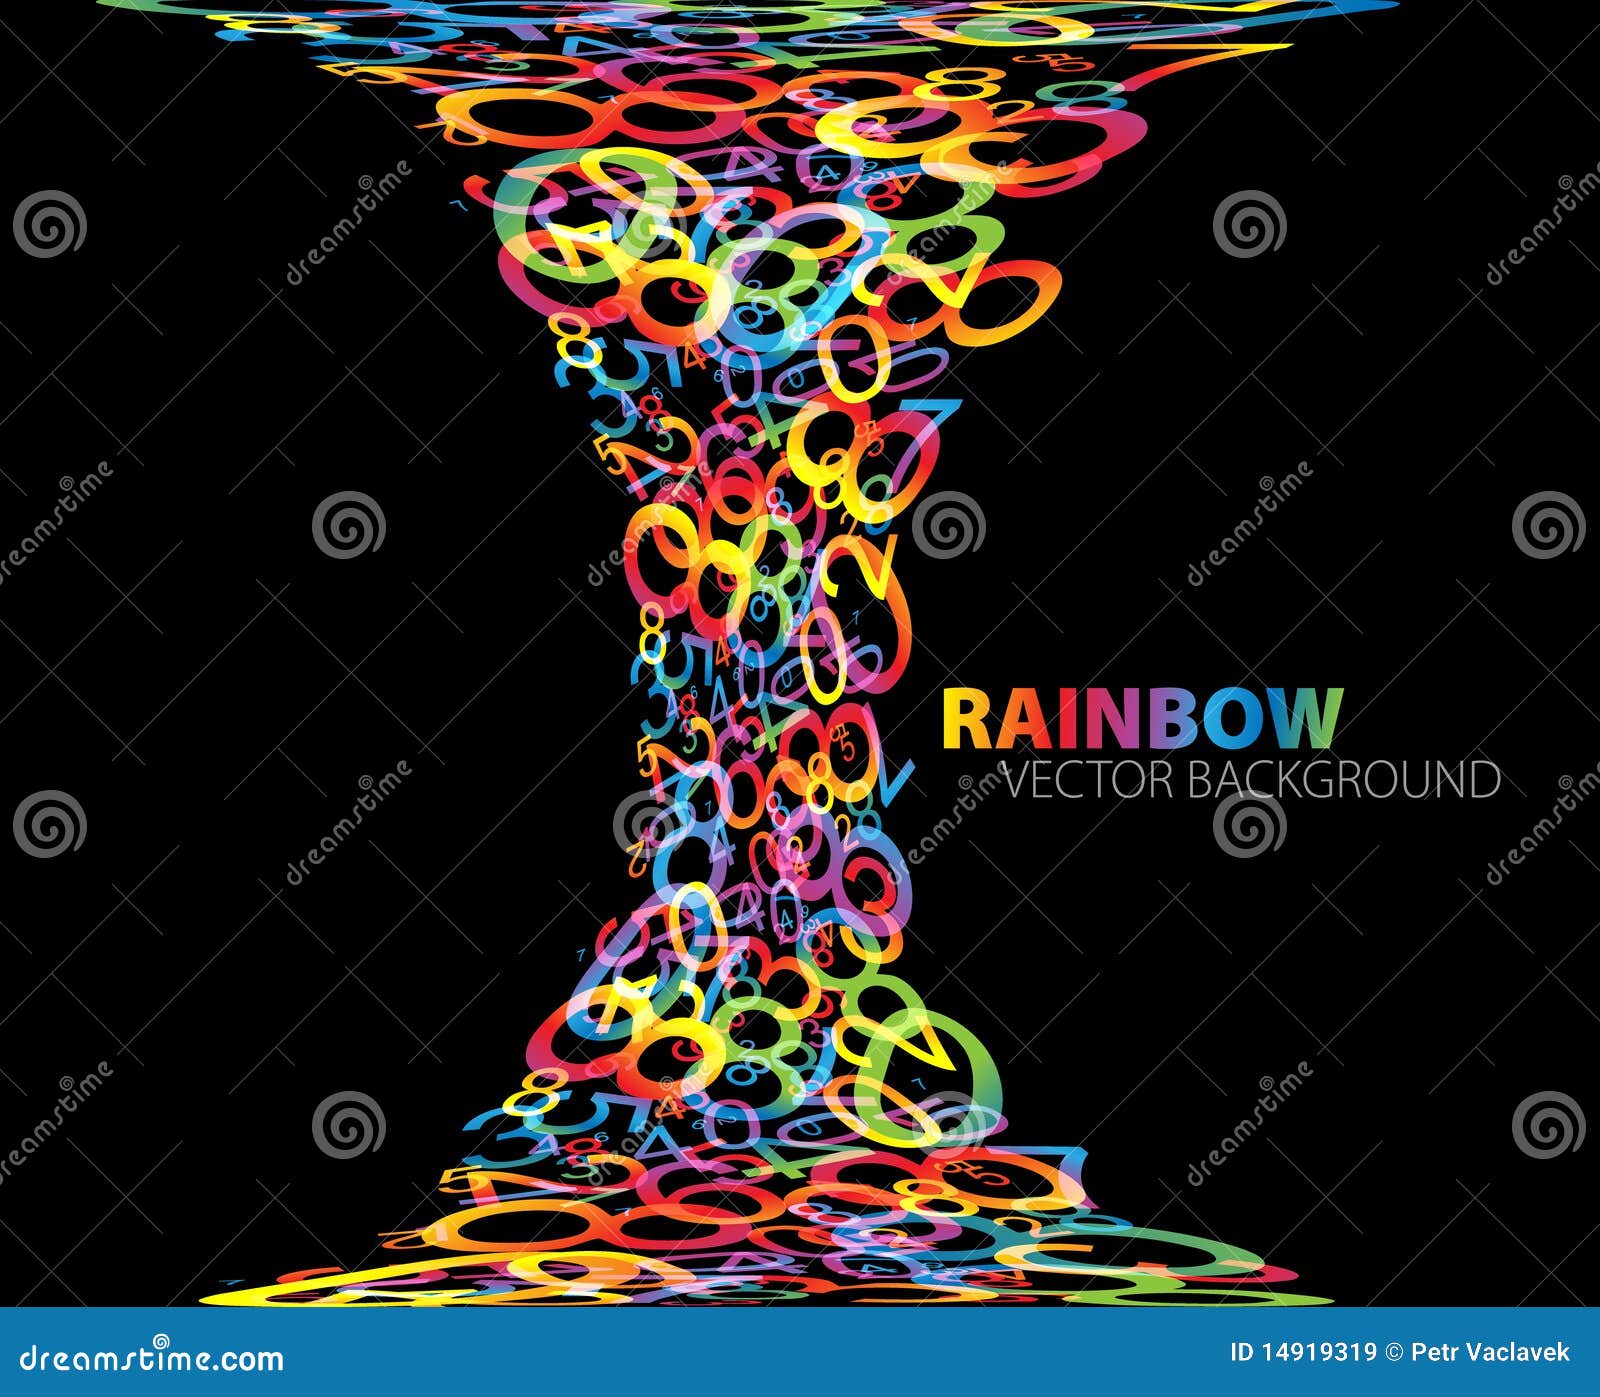 Colorful rainbow numbers stock illustration. Illustration of overlay